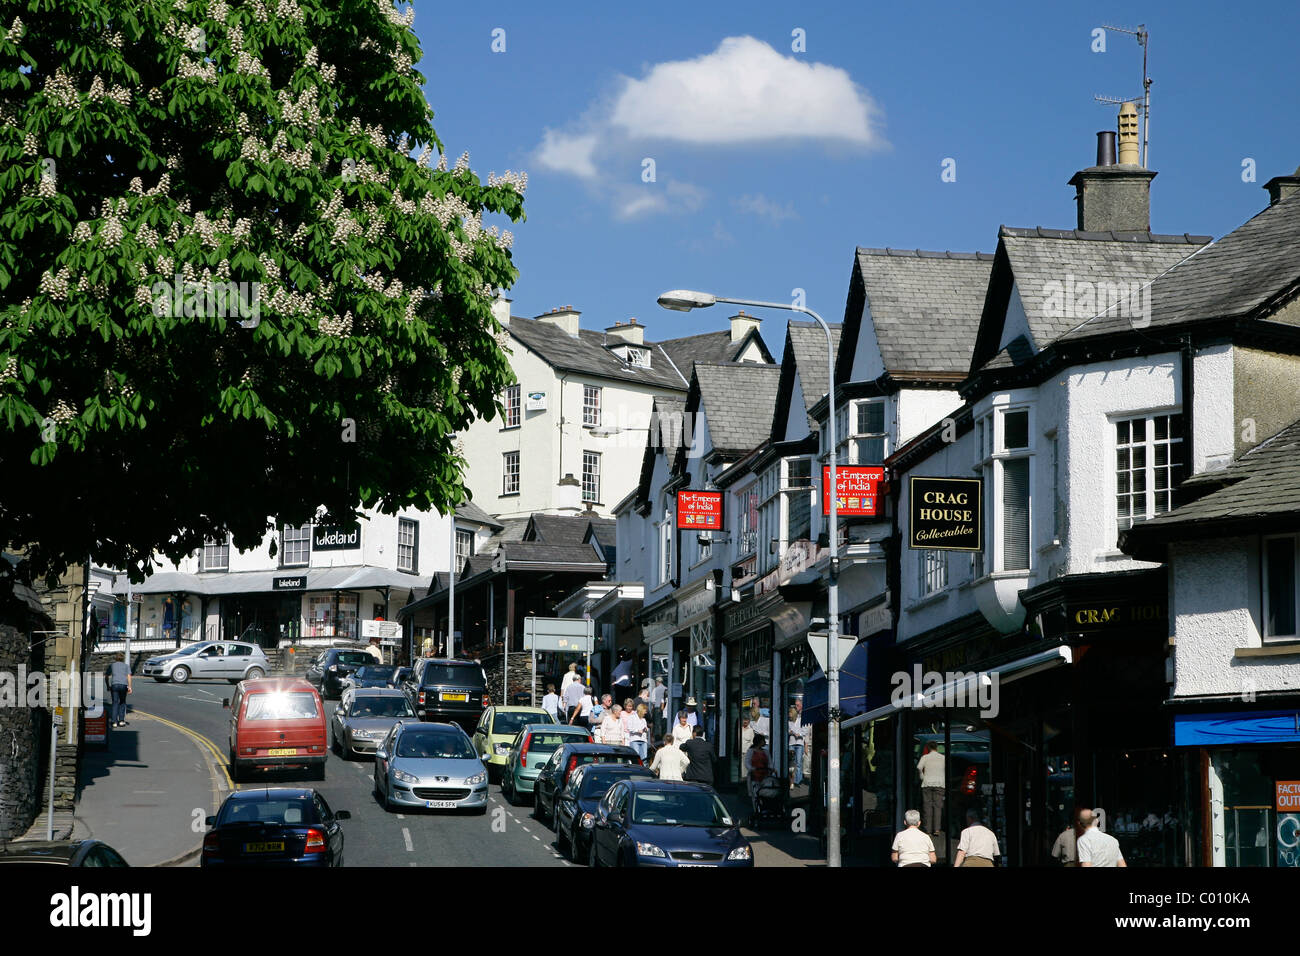 Inghilterra, cumbria, Bowness-on-Windermere, negozi e turisti Foto Stock